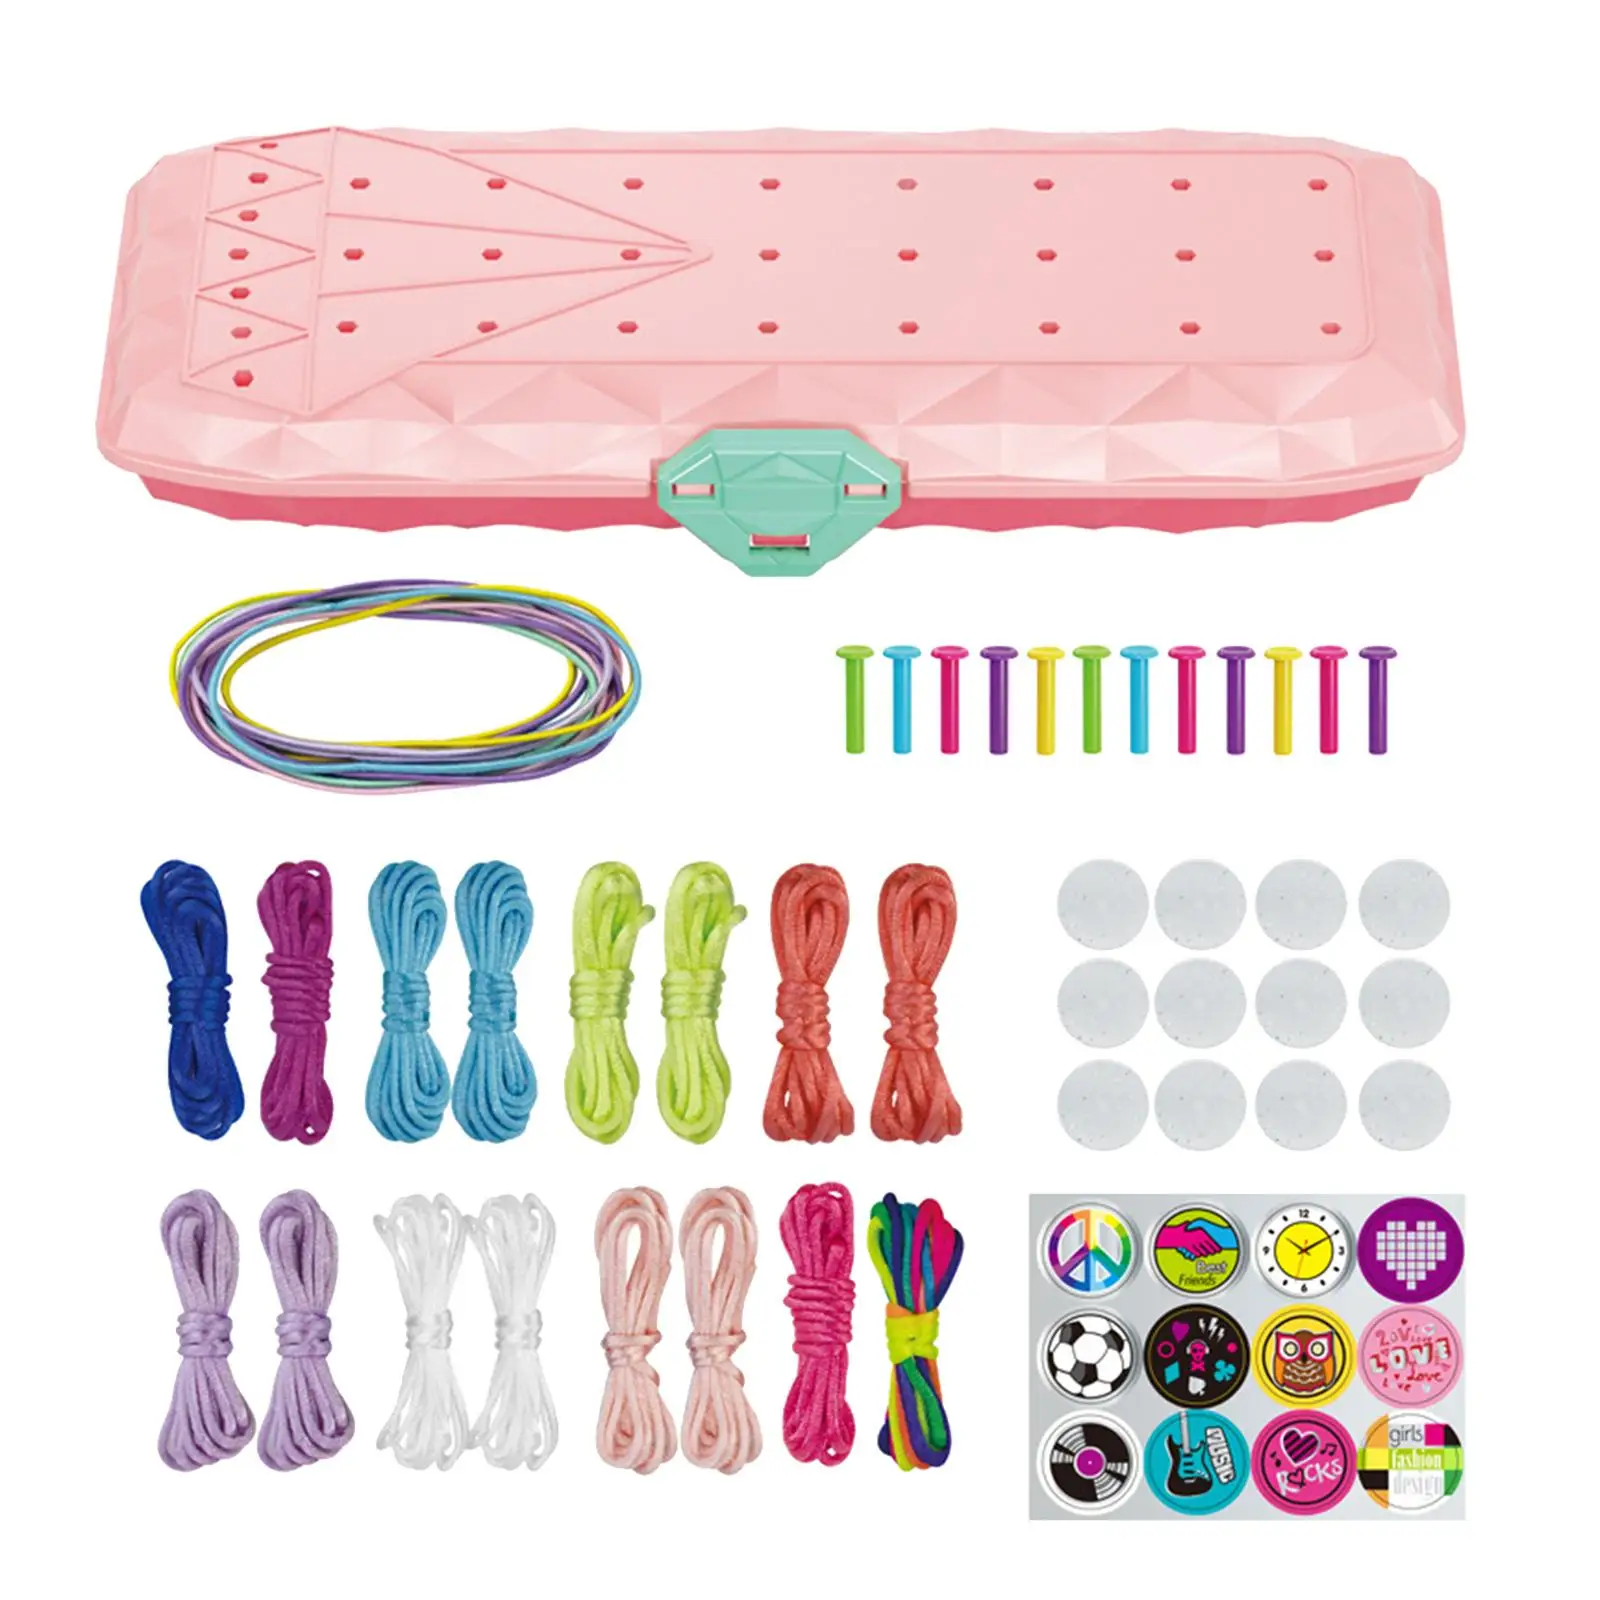 Bracelet Making Set Multicolored Bracelet Kit for Beginners Adults Women